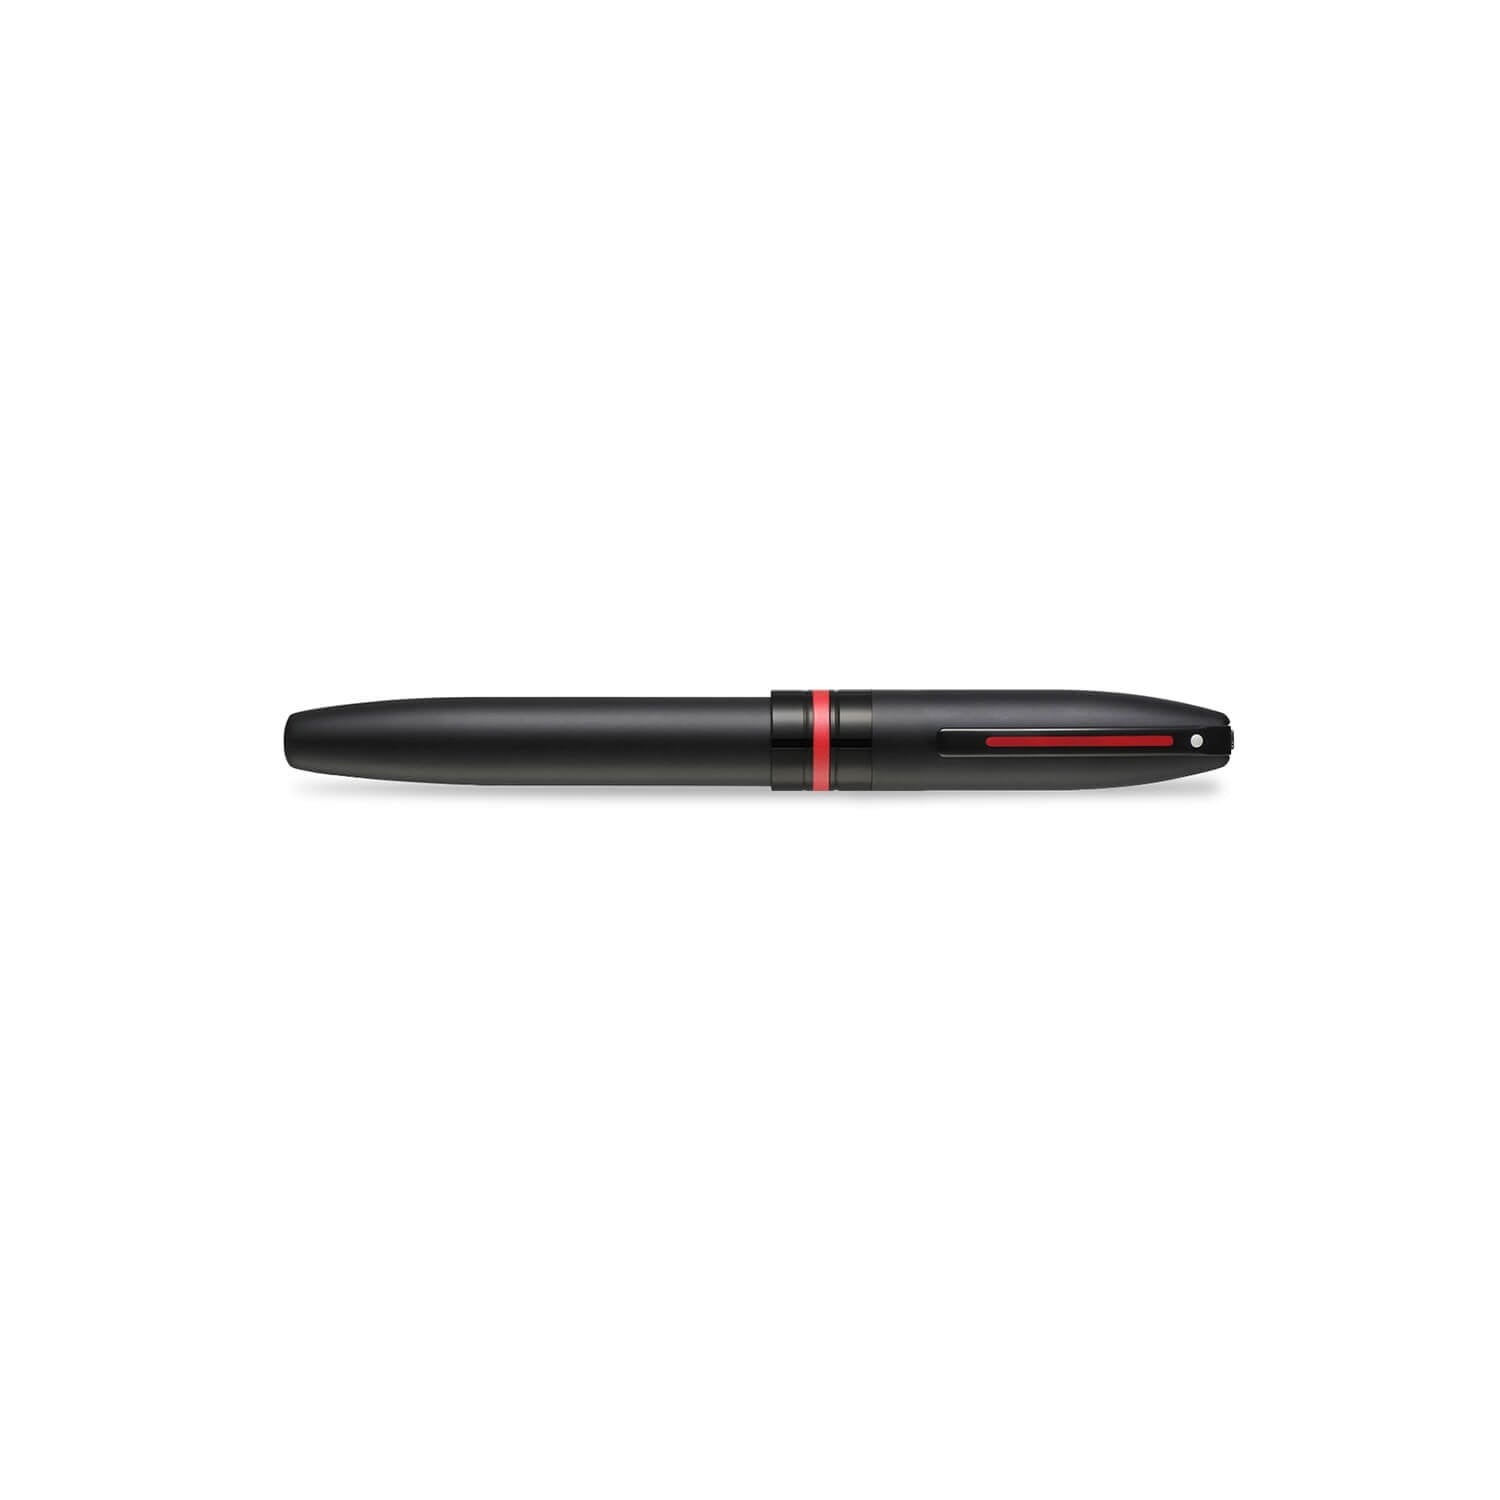 Sheaffer® ICON 9108 Matte Black Fountain Pen With Gloss Black Trim - Medium